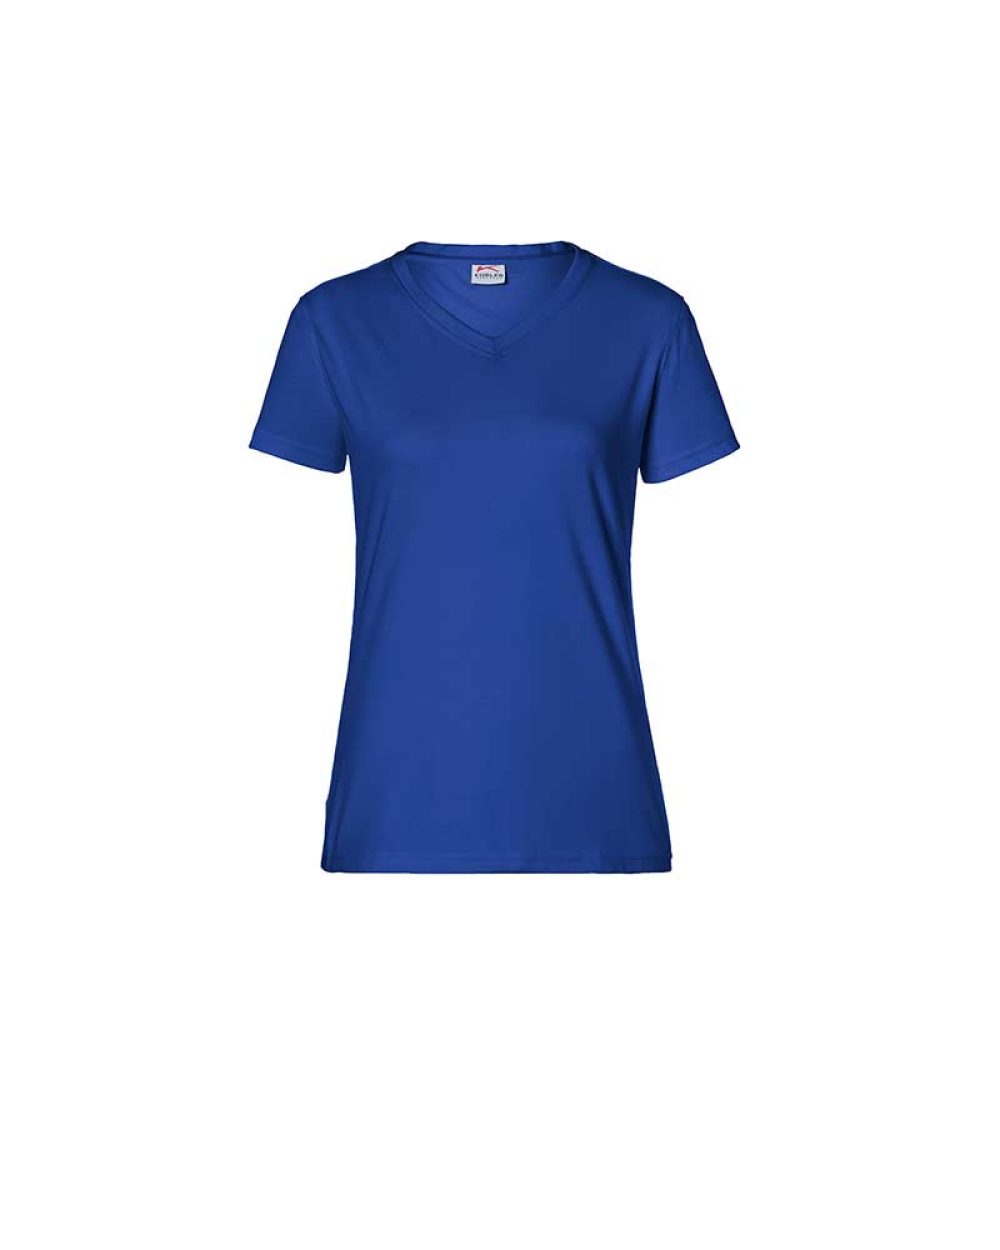 kuebler-damen-t-shirt-shirts-5024-6238-46